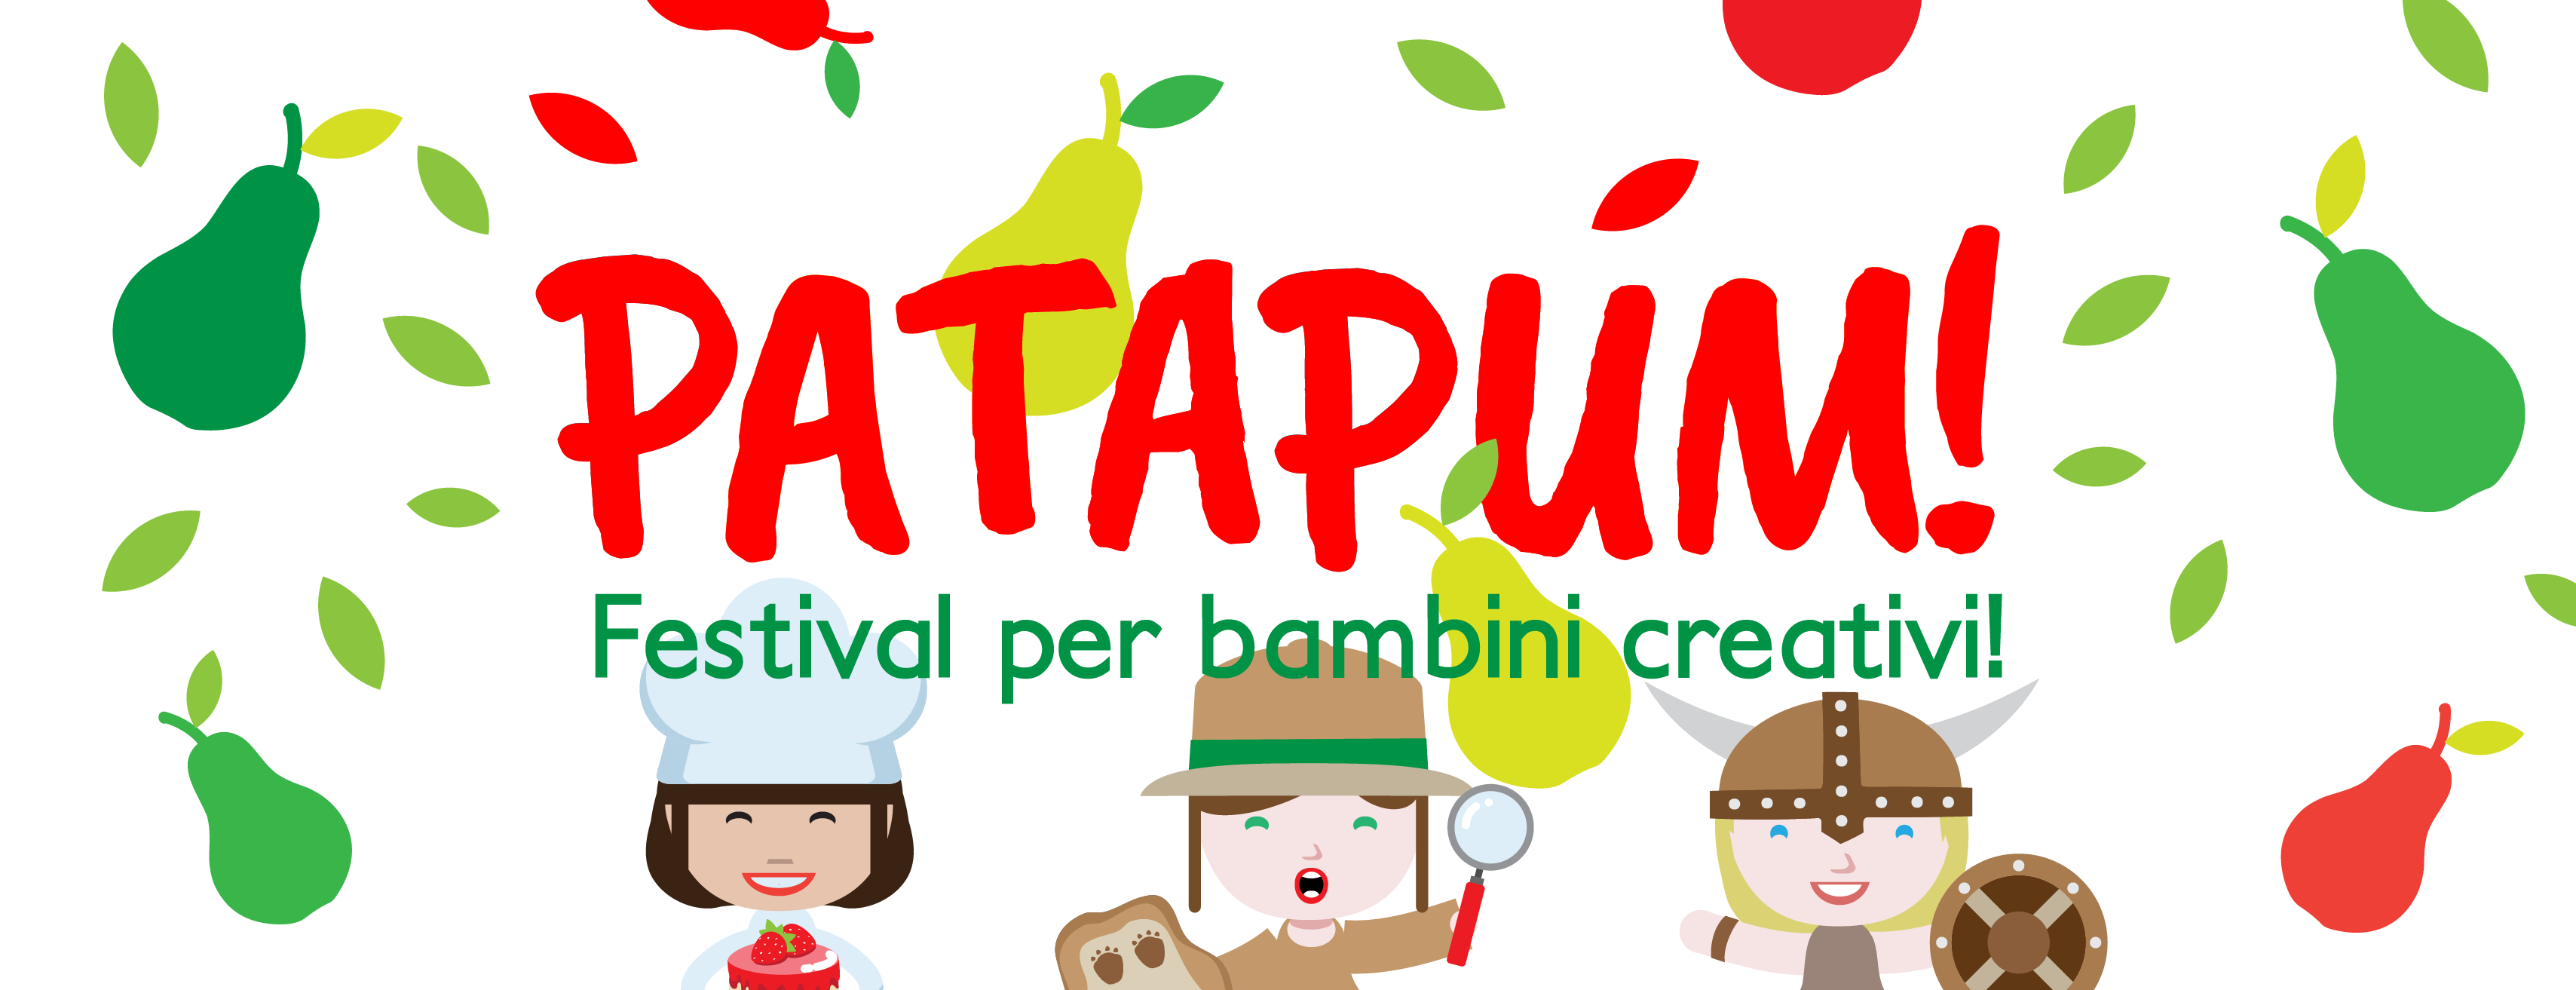 Raccolta fondi per Patapum festival